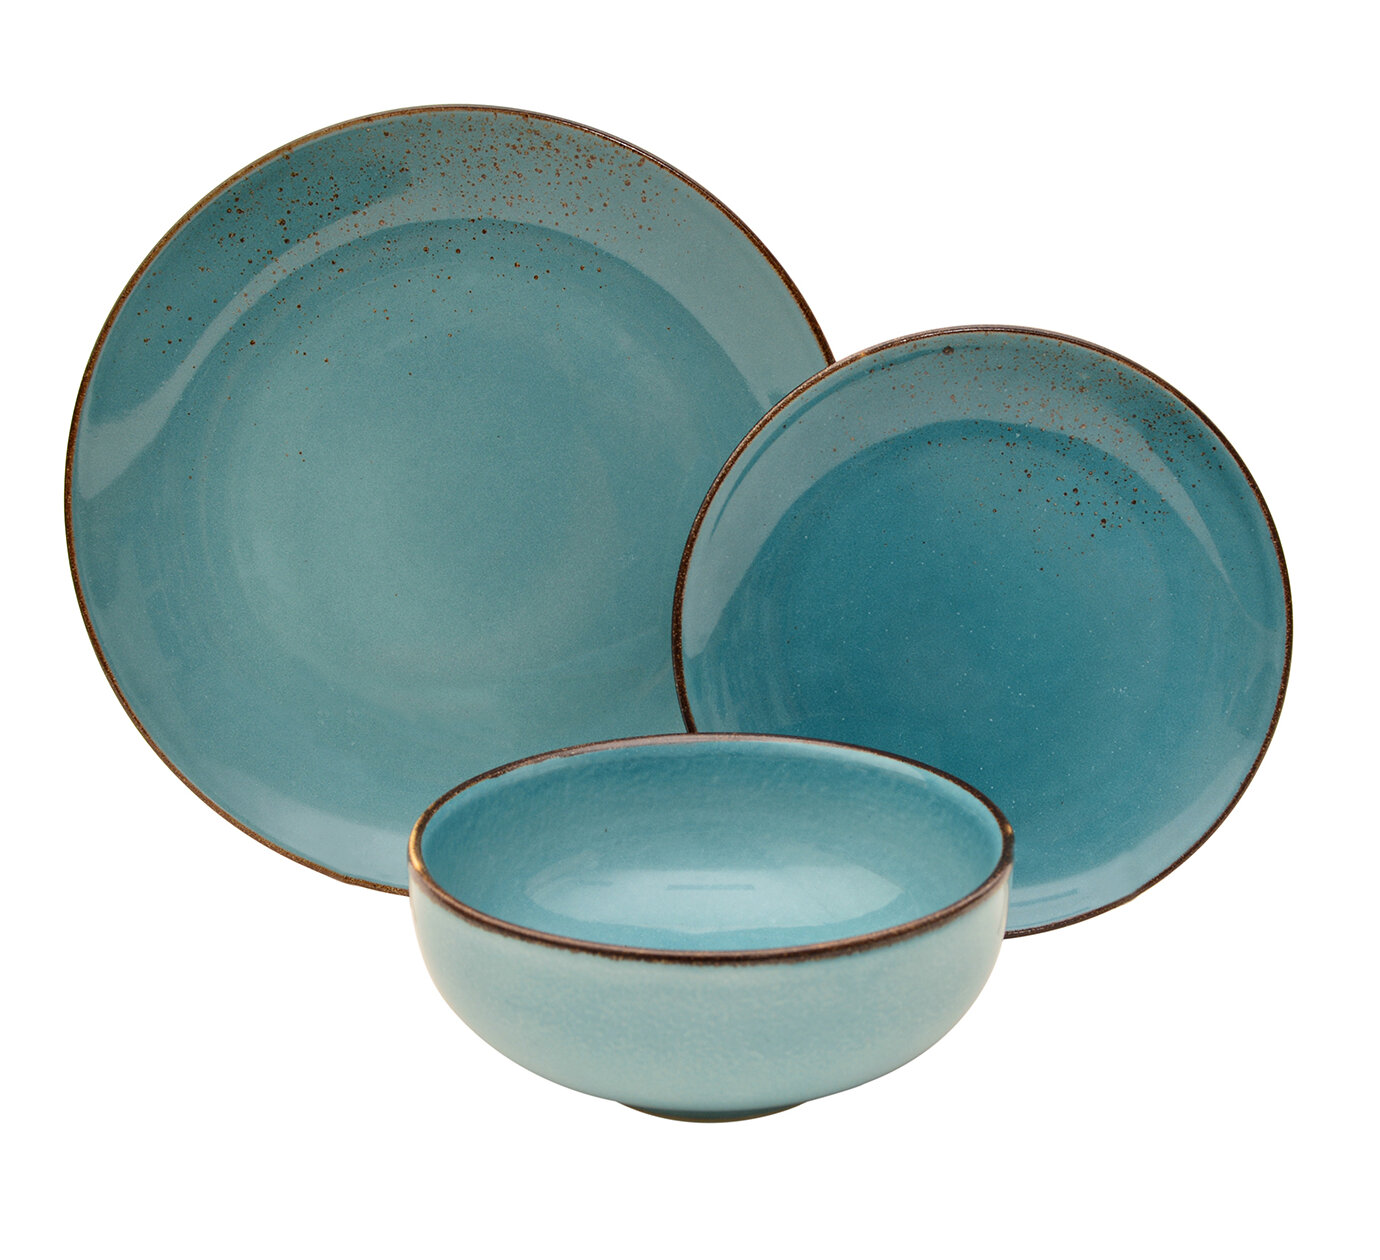 Elanze Designs Reactive Glaze Ceramic Stoneware Dinnerware 16 Piece Set Ice Blue Service for 4 